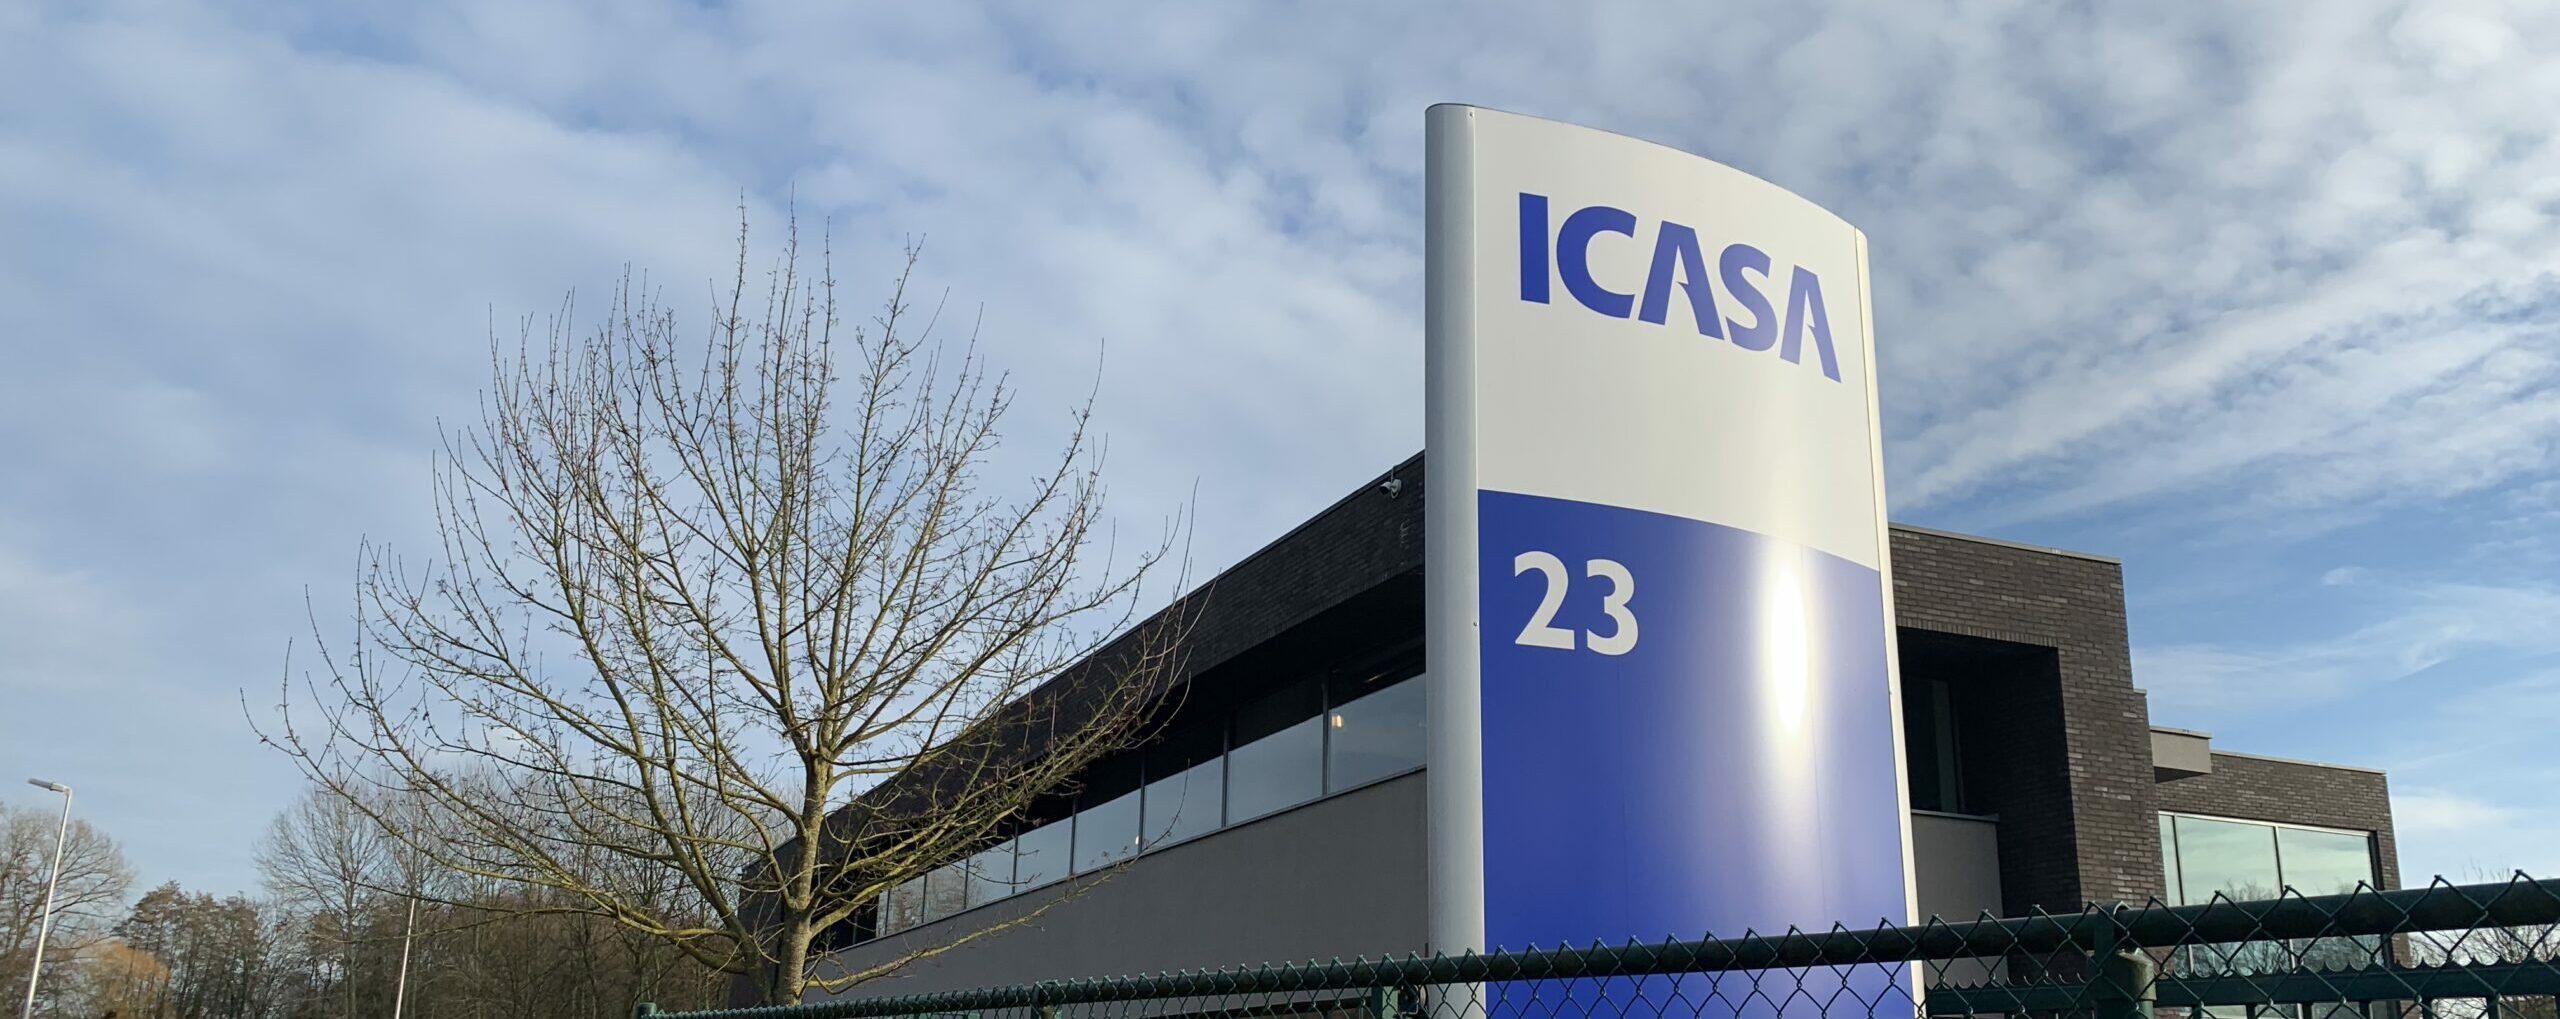 ICASA office